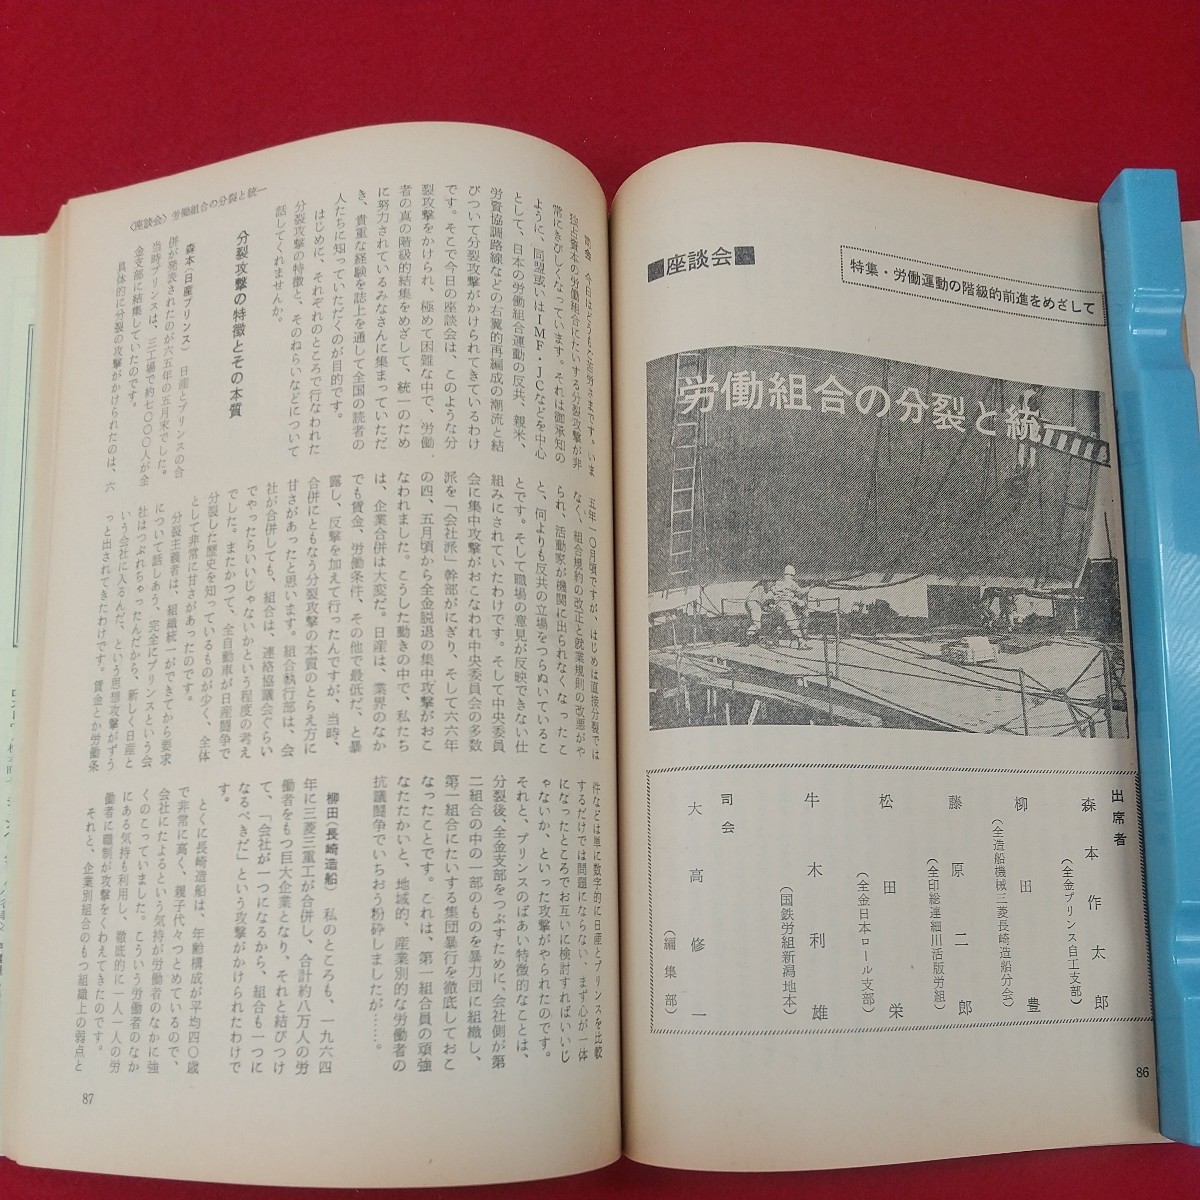 f-507※1 労働・農民運動 1968年5月号 労働運動の階級的前進をめざして 1968年5月1日発行 新日本出版社 メーデーとベトナム人民支援_画像7